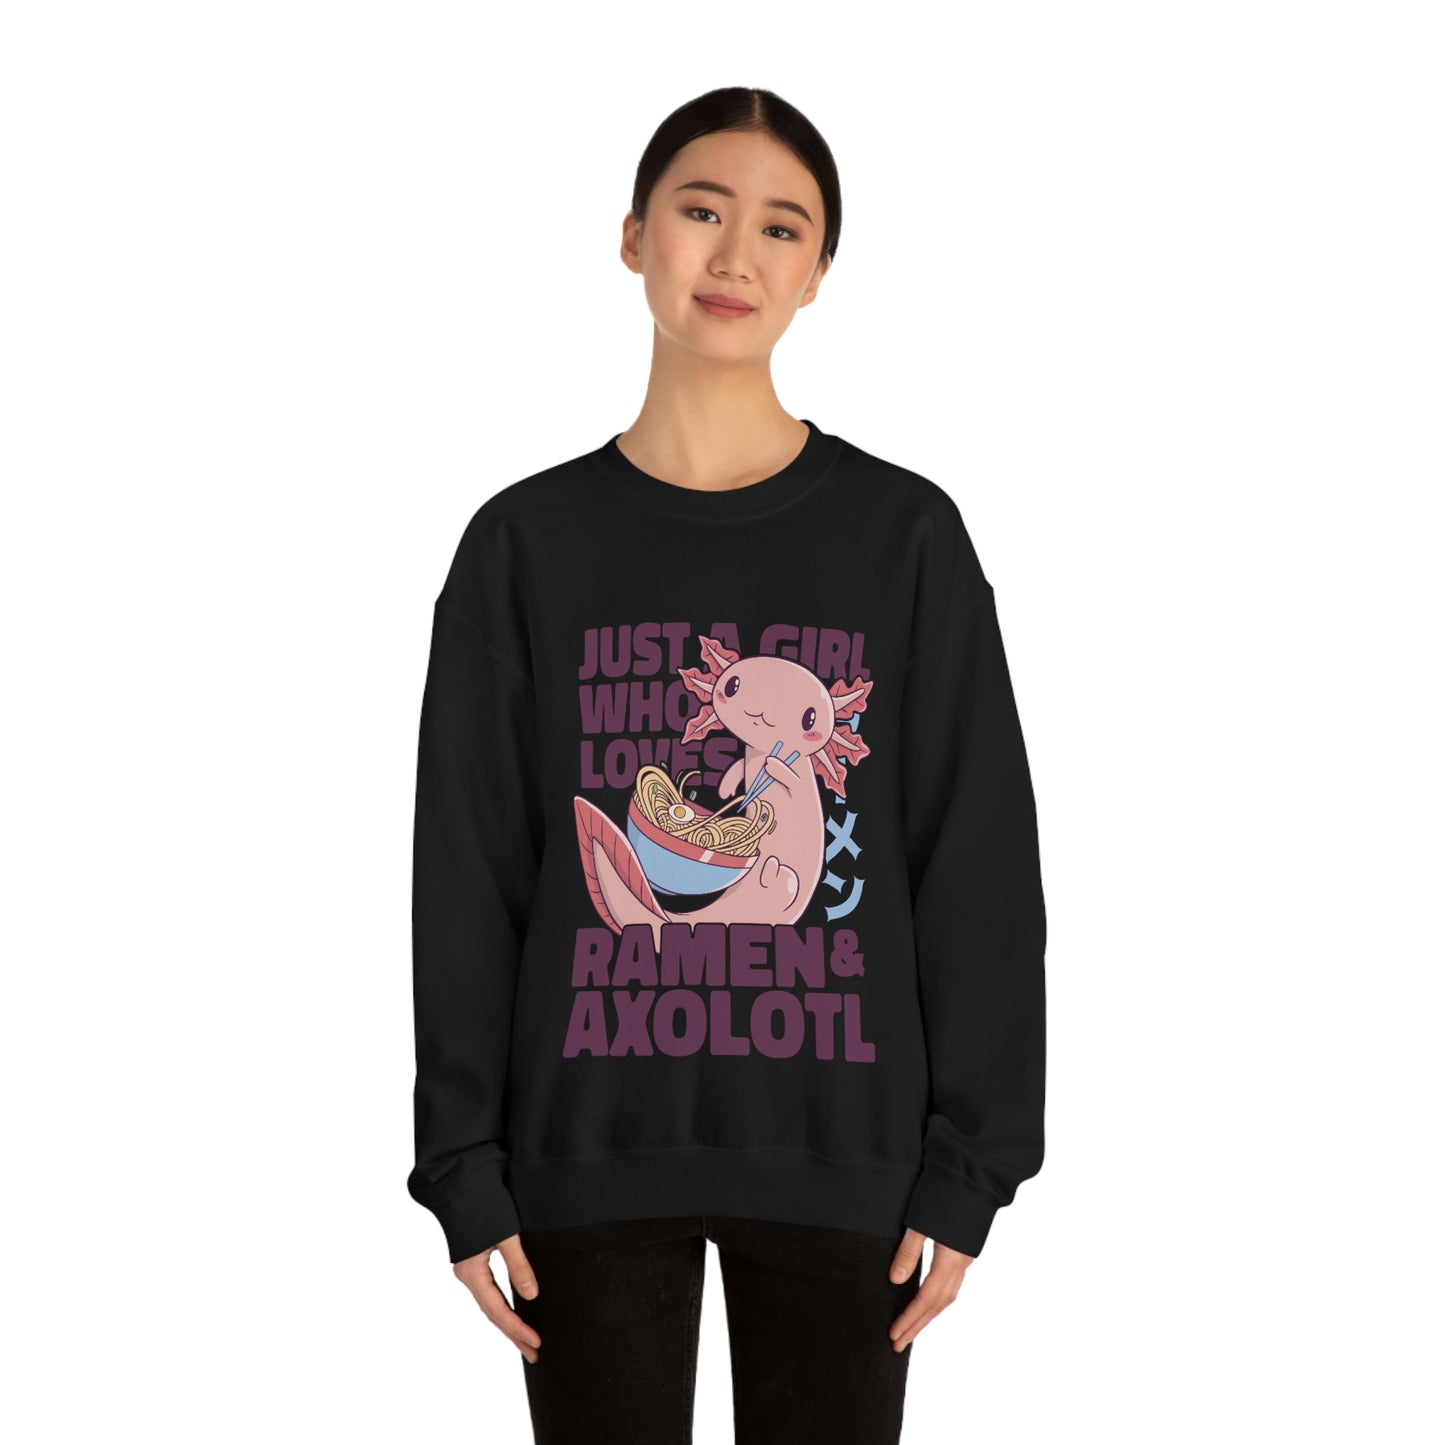 Kawaii Aesthetic Just A Girl Who Loves Ramen & Axolotl Sweatshirt